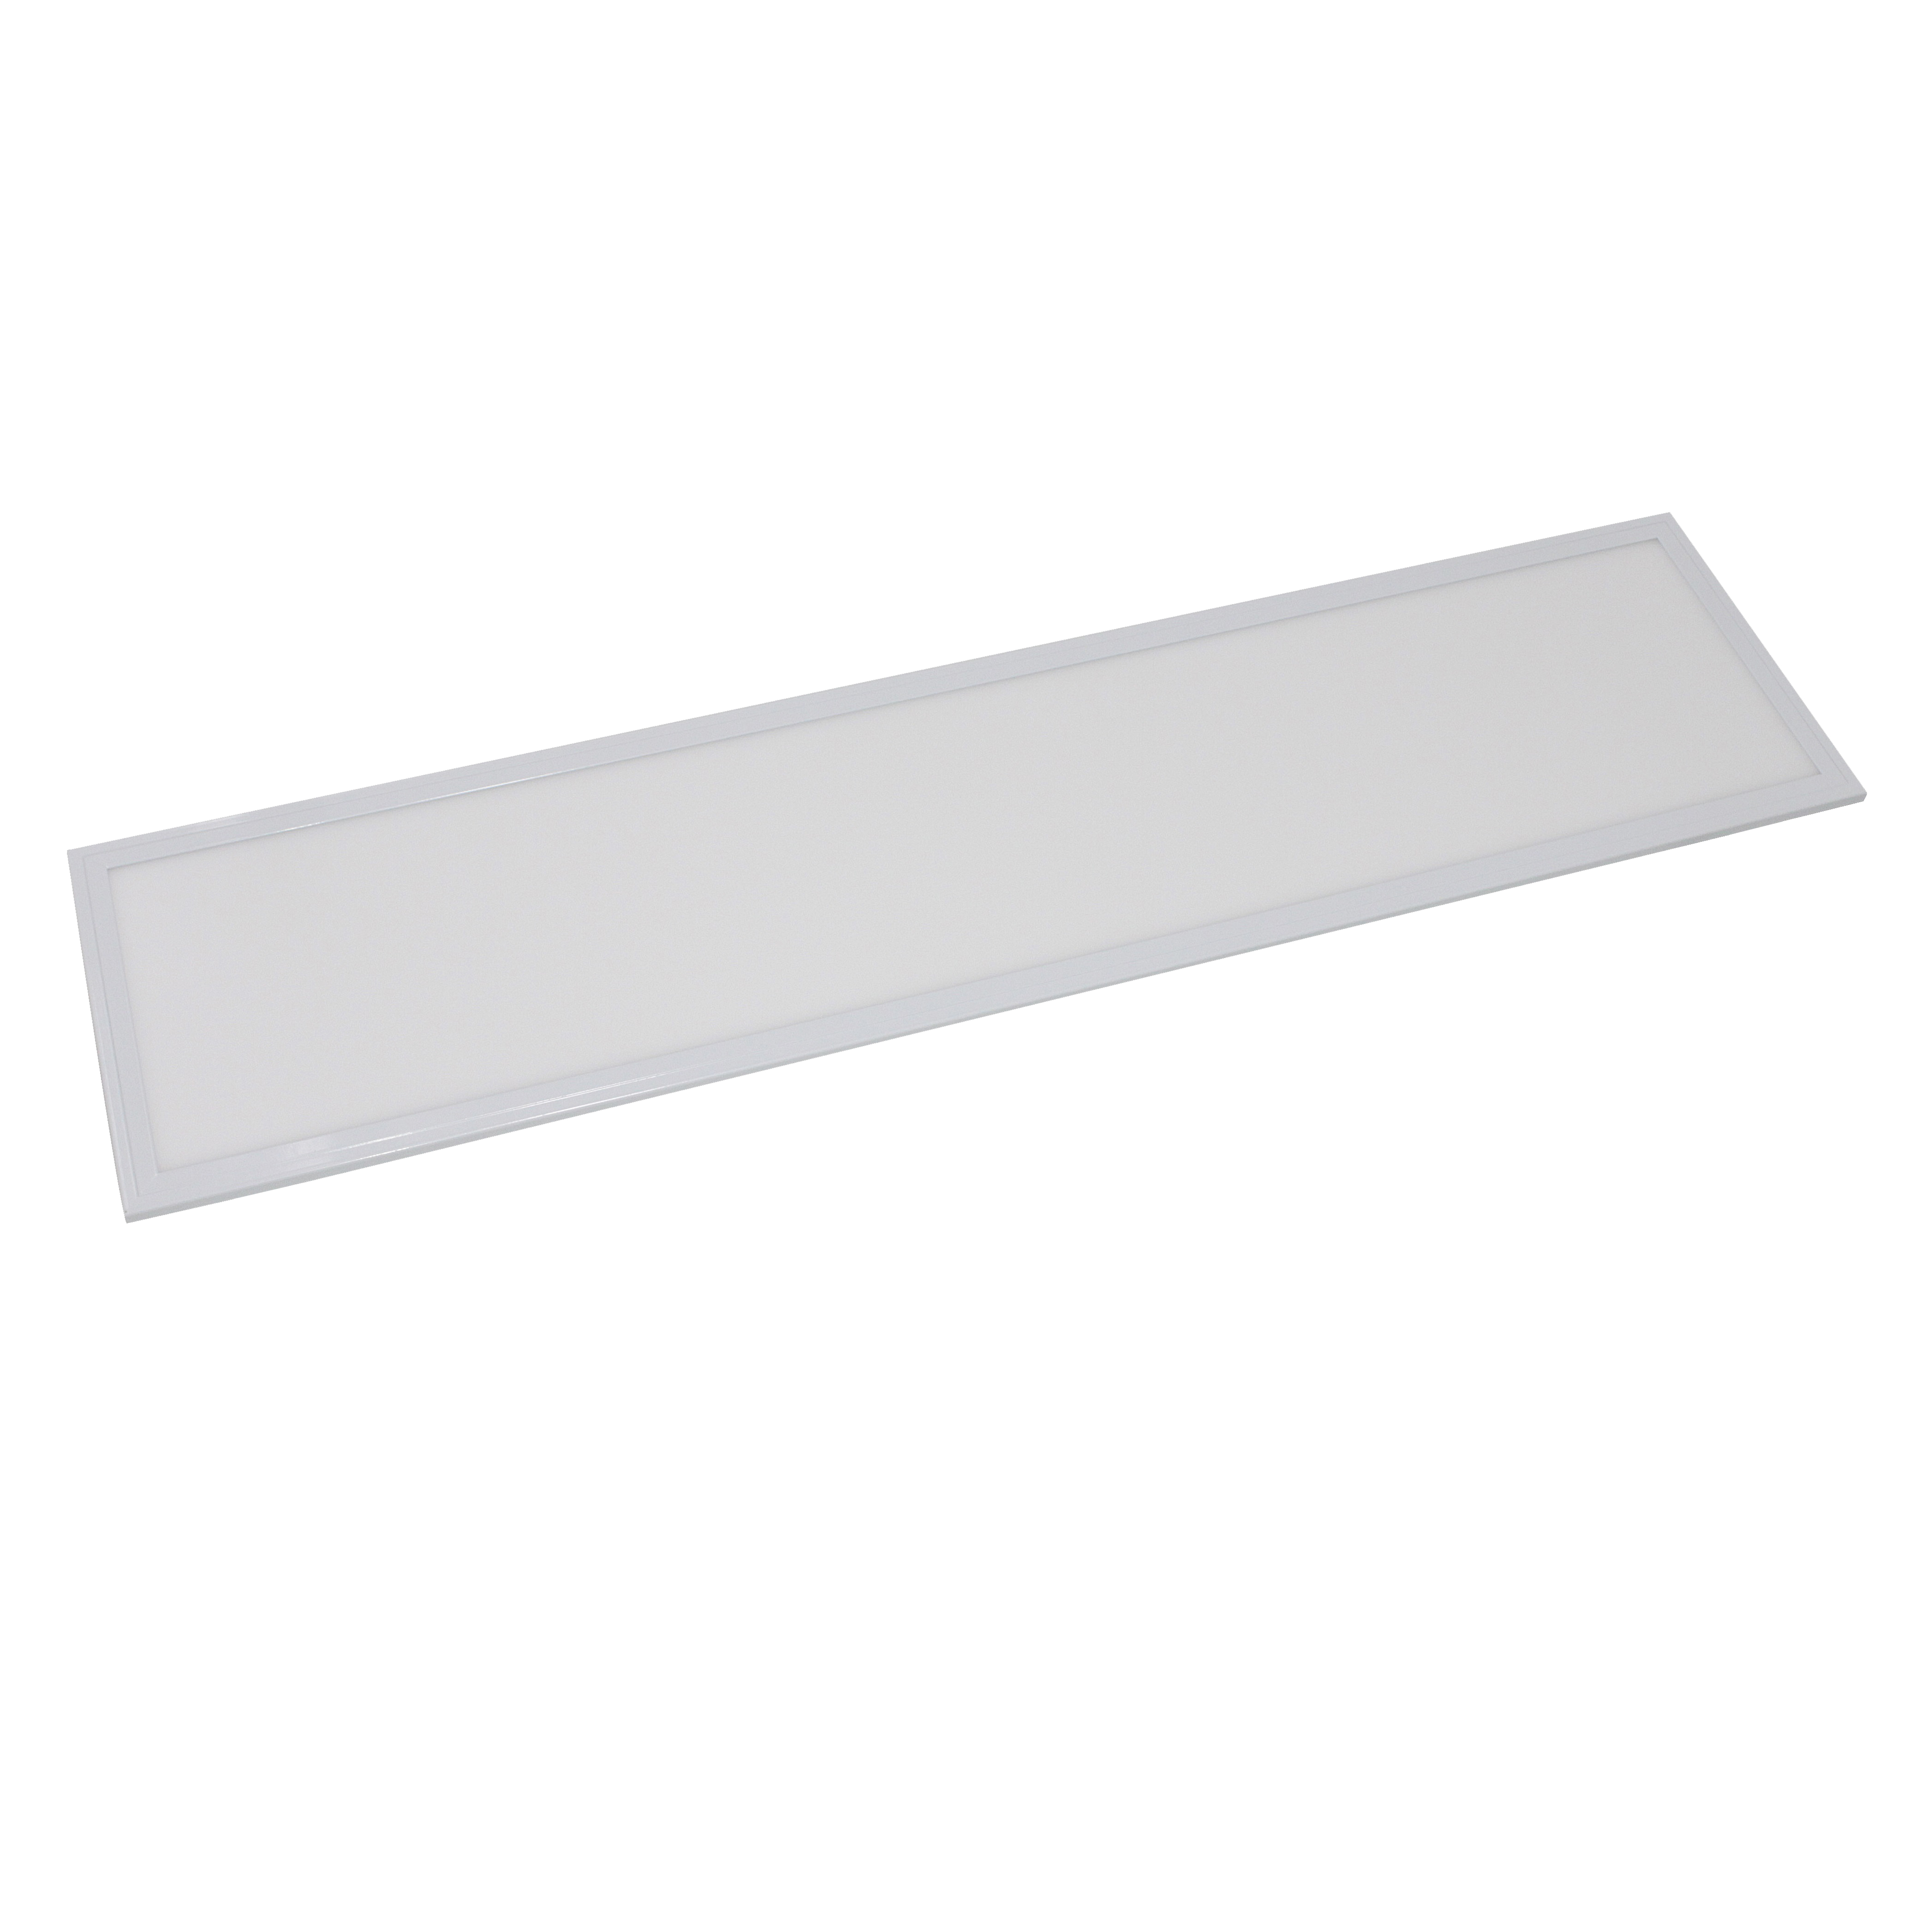 LED-Panel MULTI PROLine 15 - 60 W weiß tageslichtweiß 860 1.245 x 308 x 11 mm